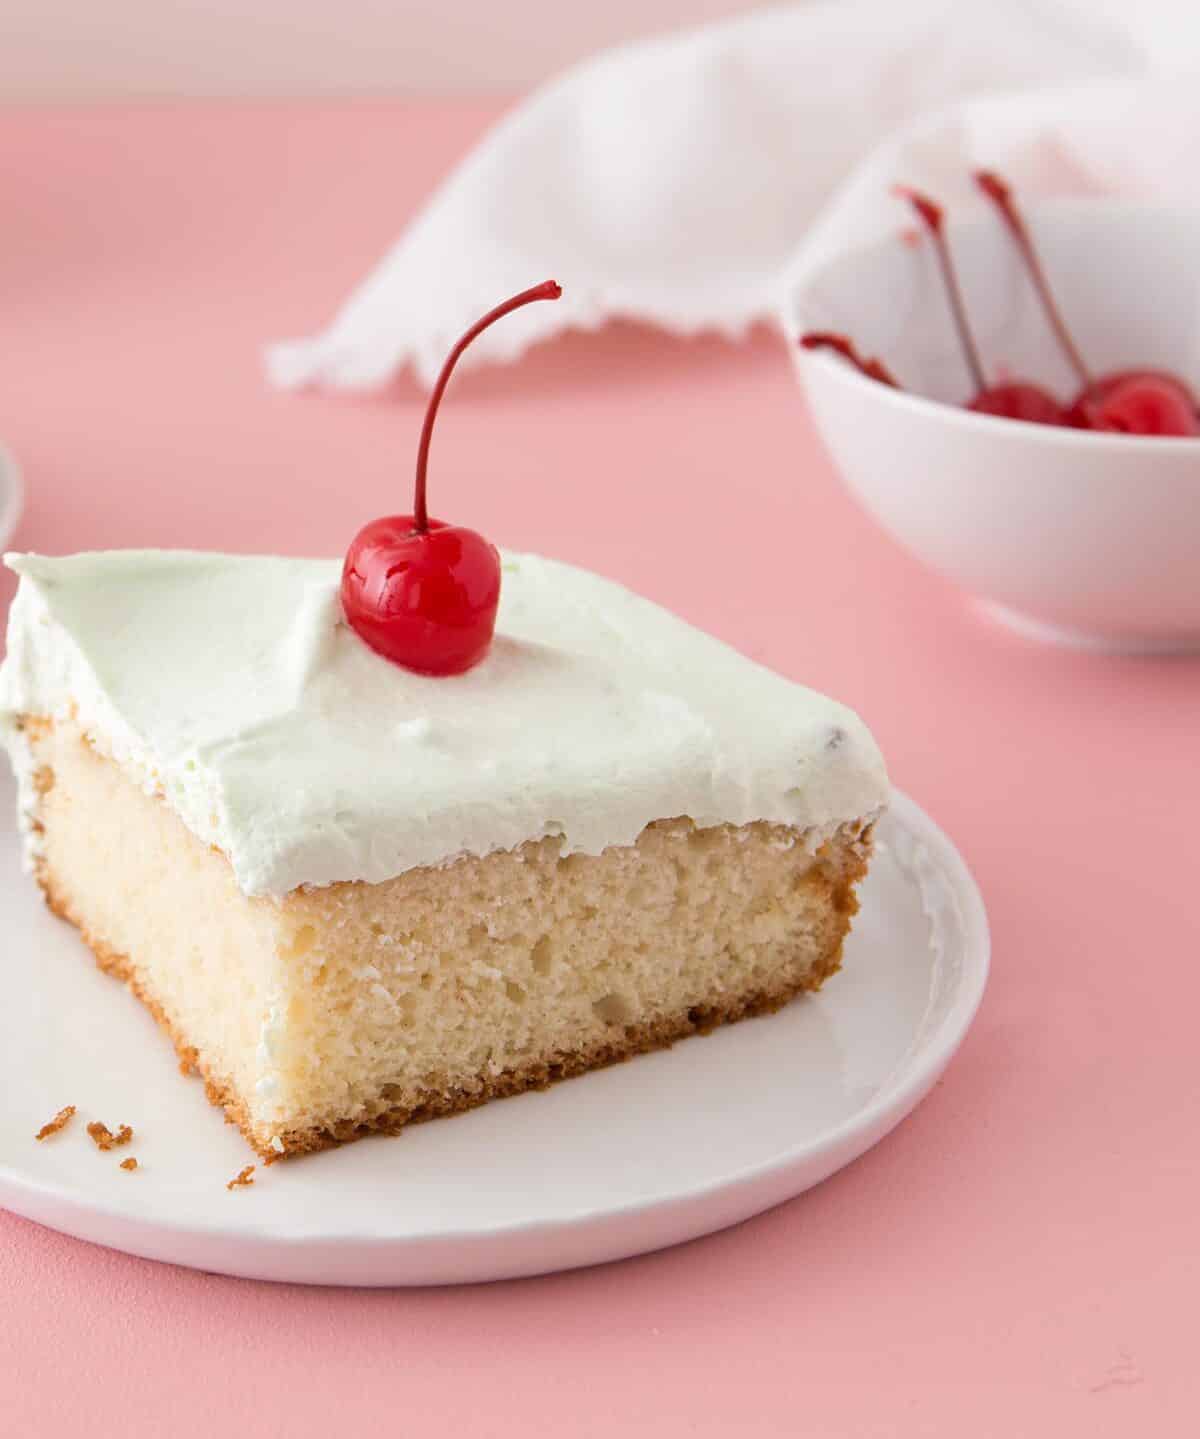 Delicious Pistachio Cake Recipe: Perfect for Any Occasion!